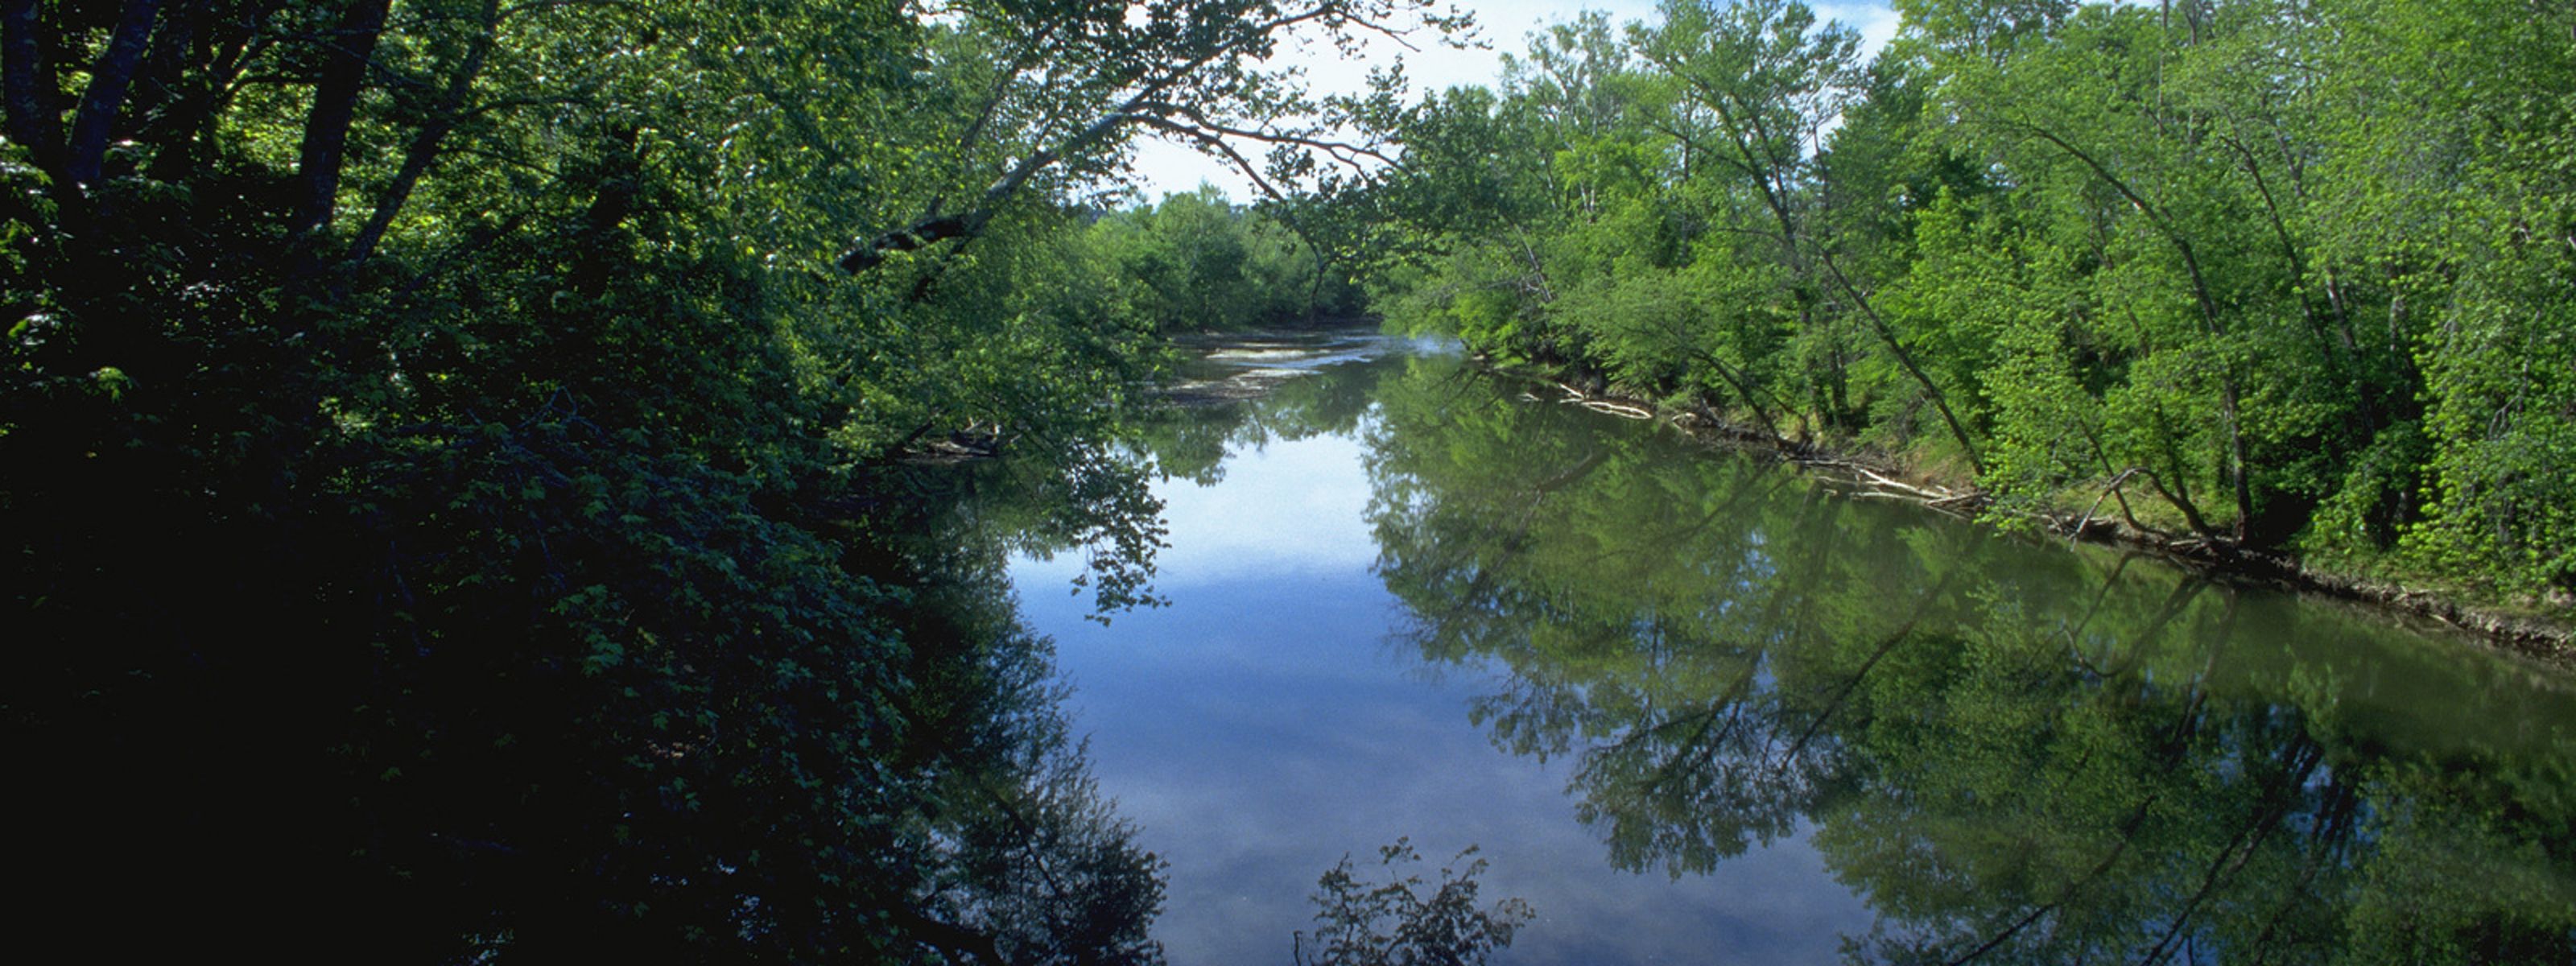 A river meanders through green shorelines.